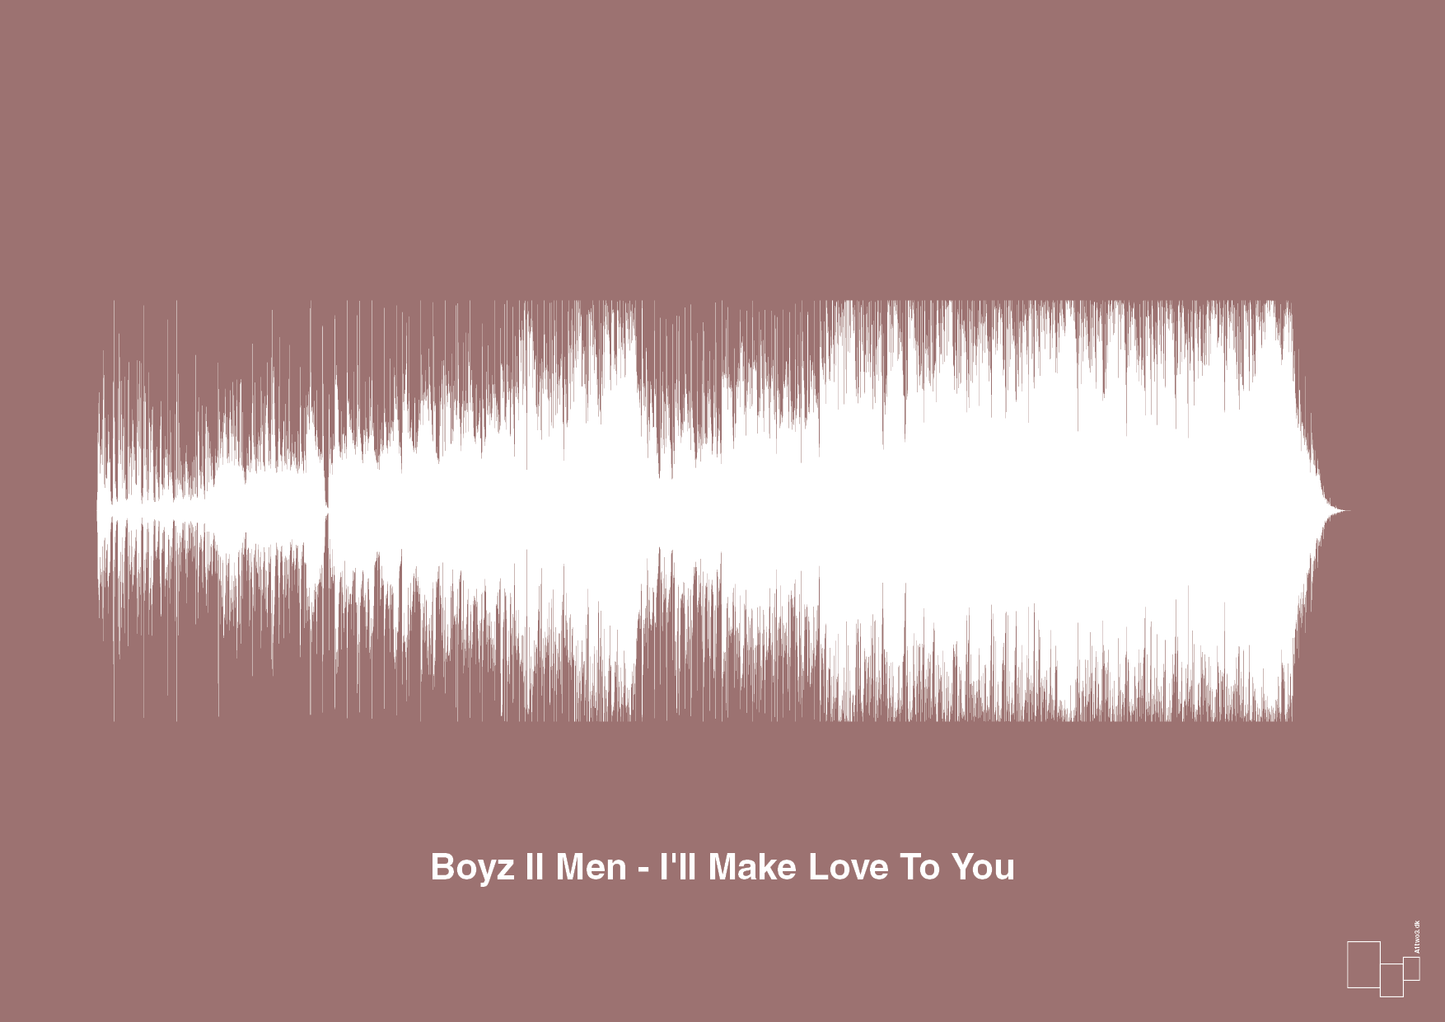 boyz II men - i'll make love to you - Plakat med Musik i Plum